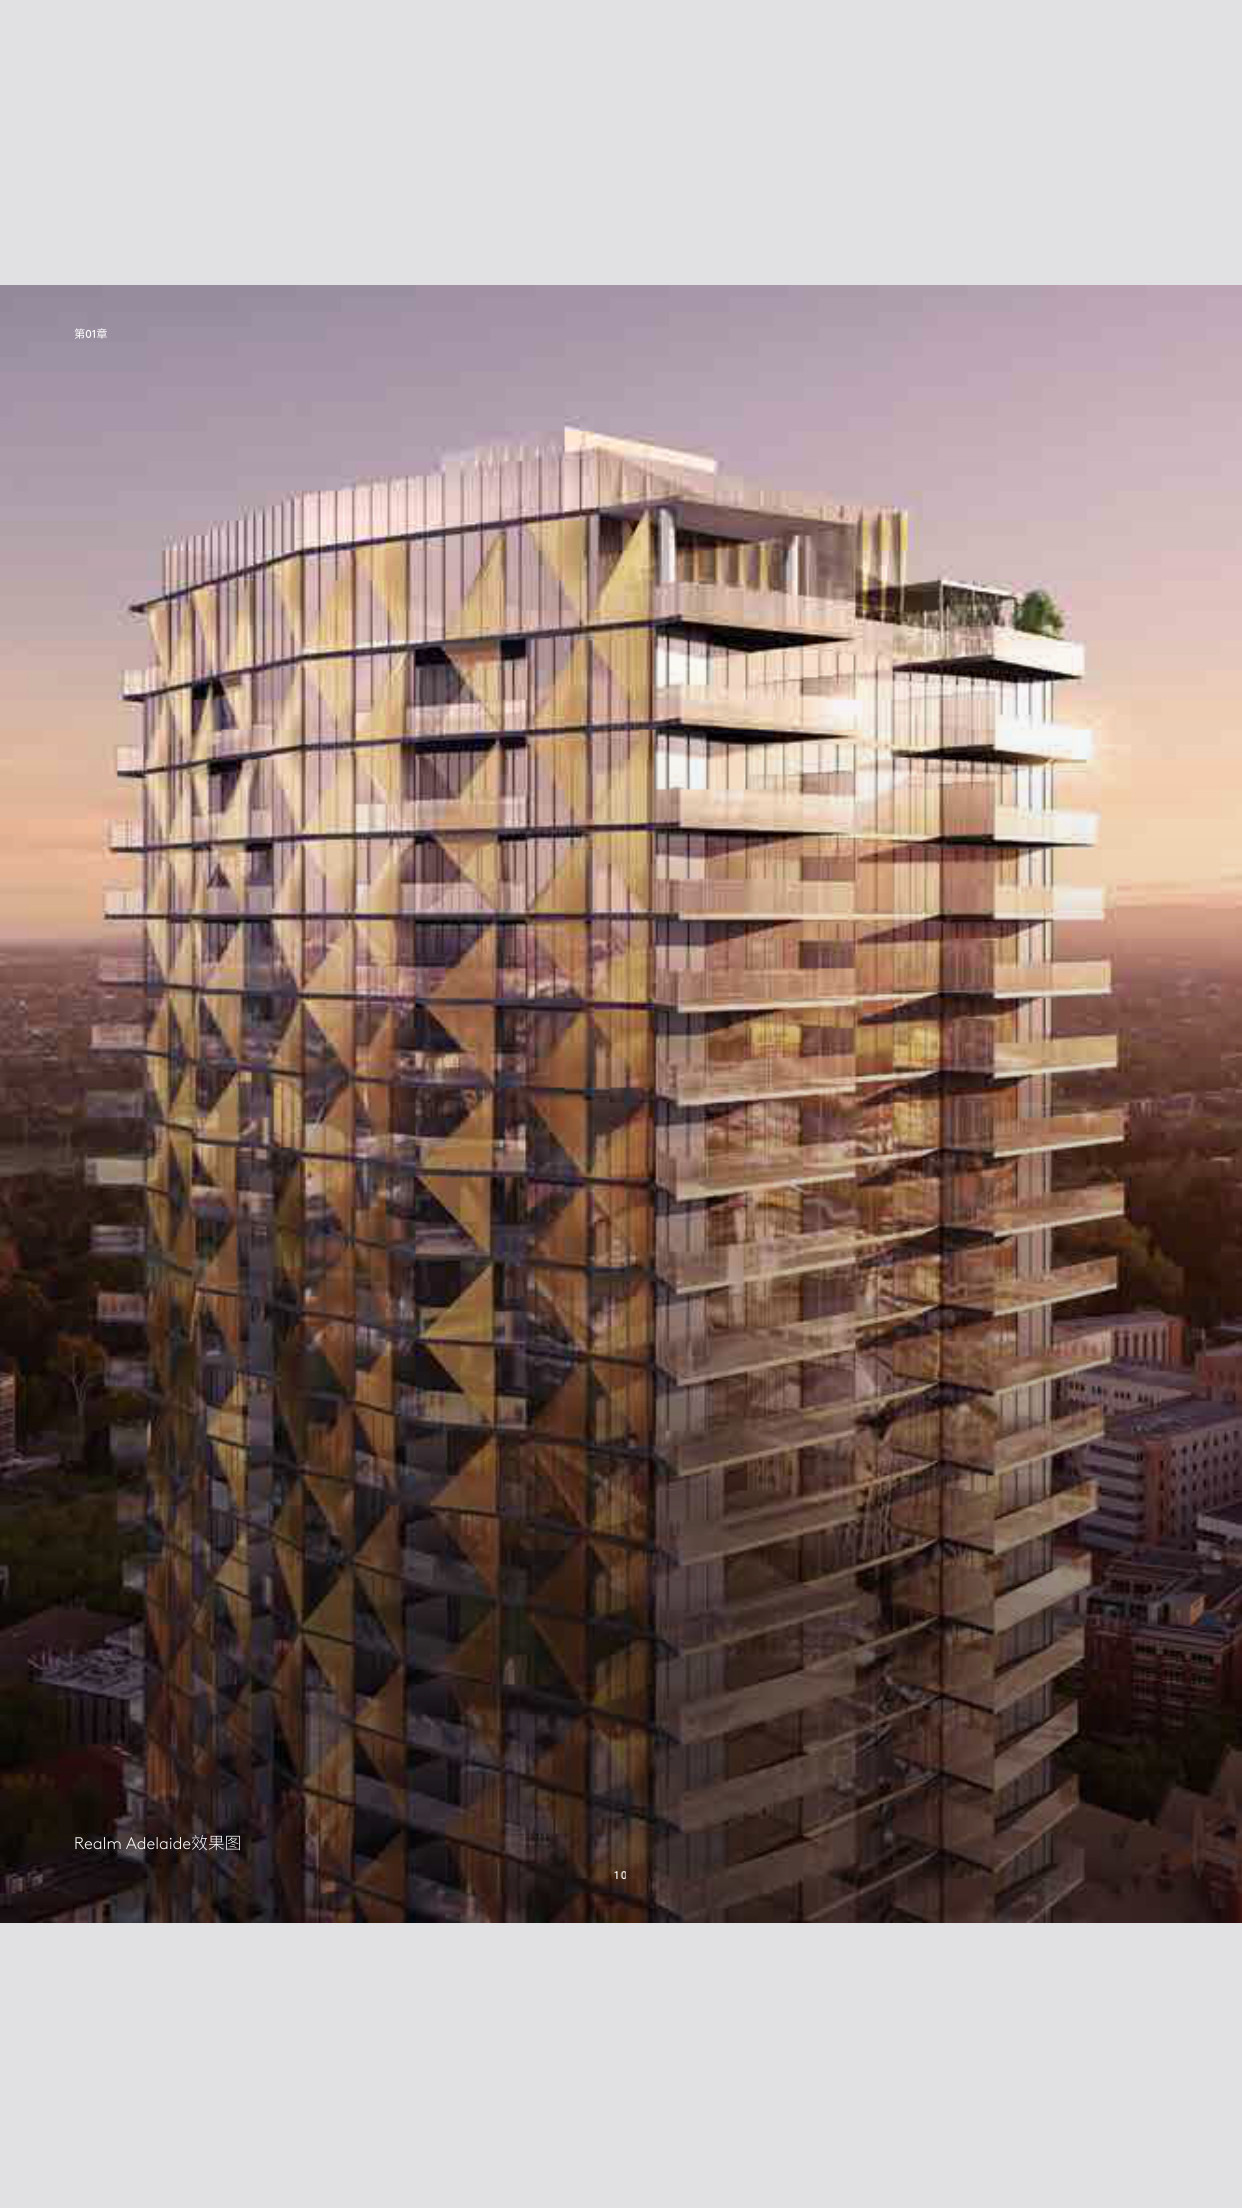 Realm Adelaide 空中美宅系列 高端公寓住宅 顶层娱乐区 俯瞰城市美景 奢华生活 礼宾服务